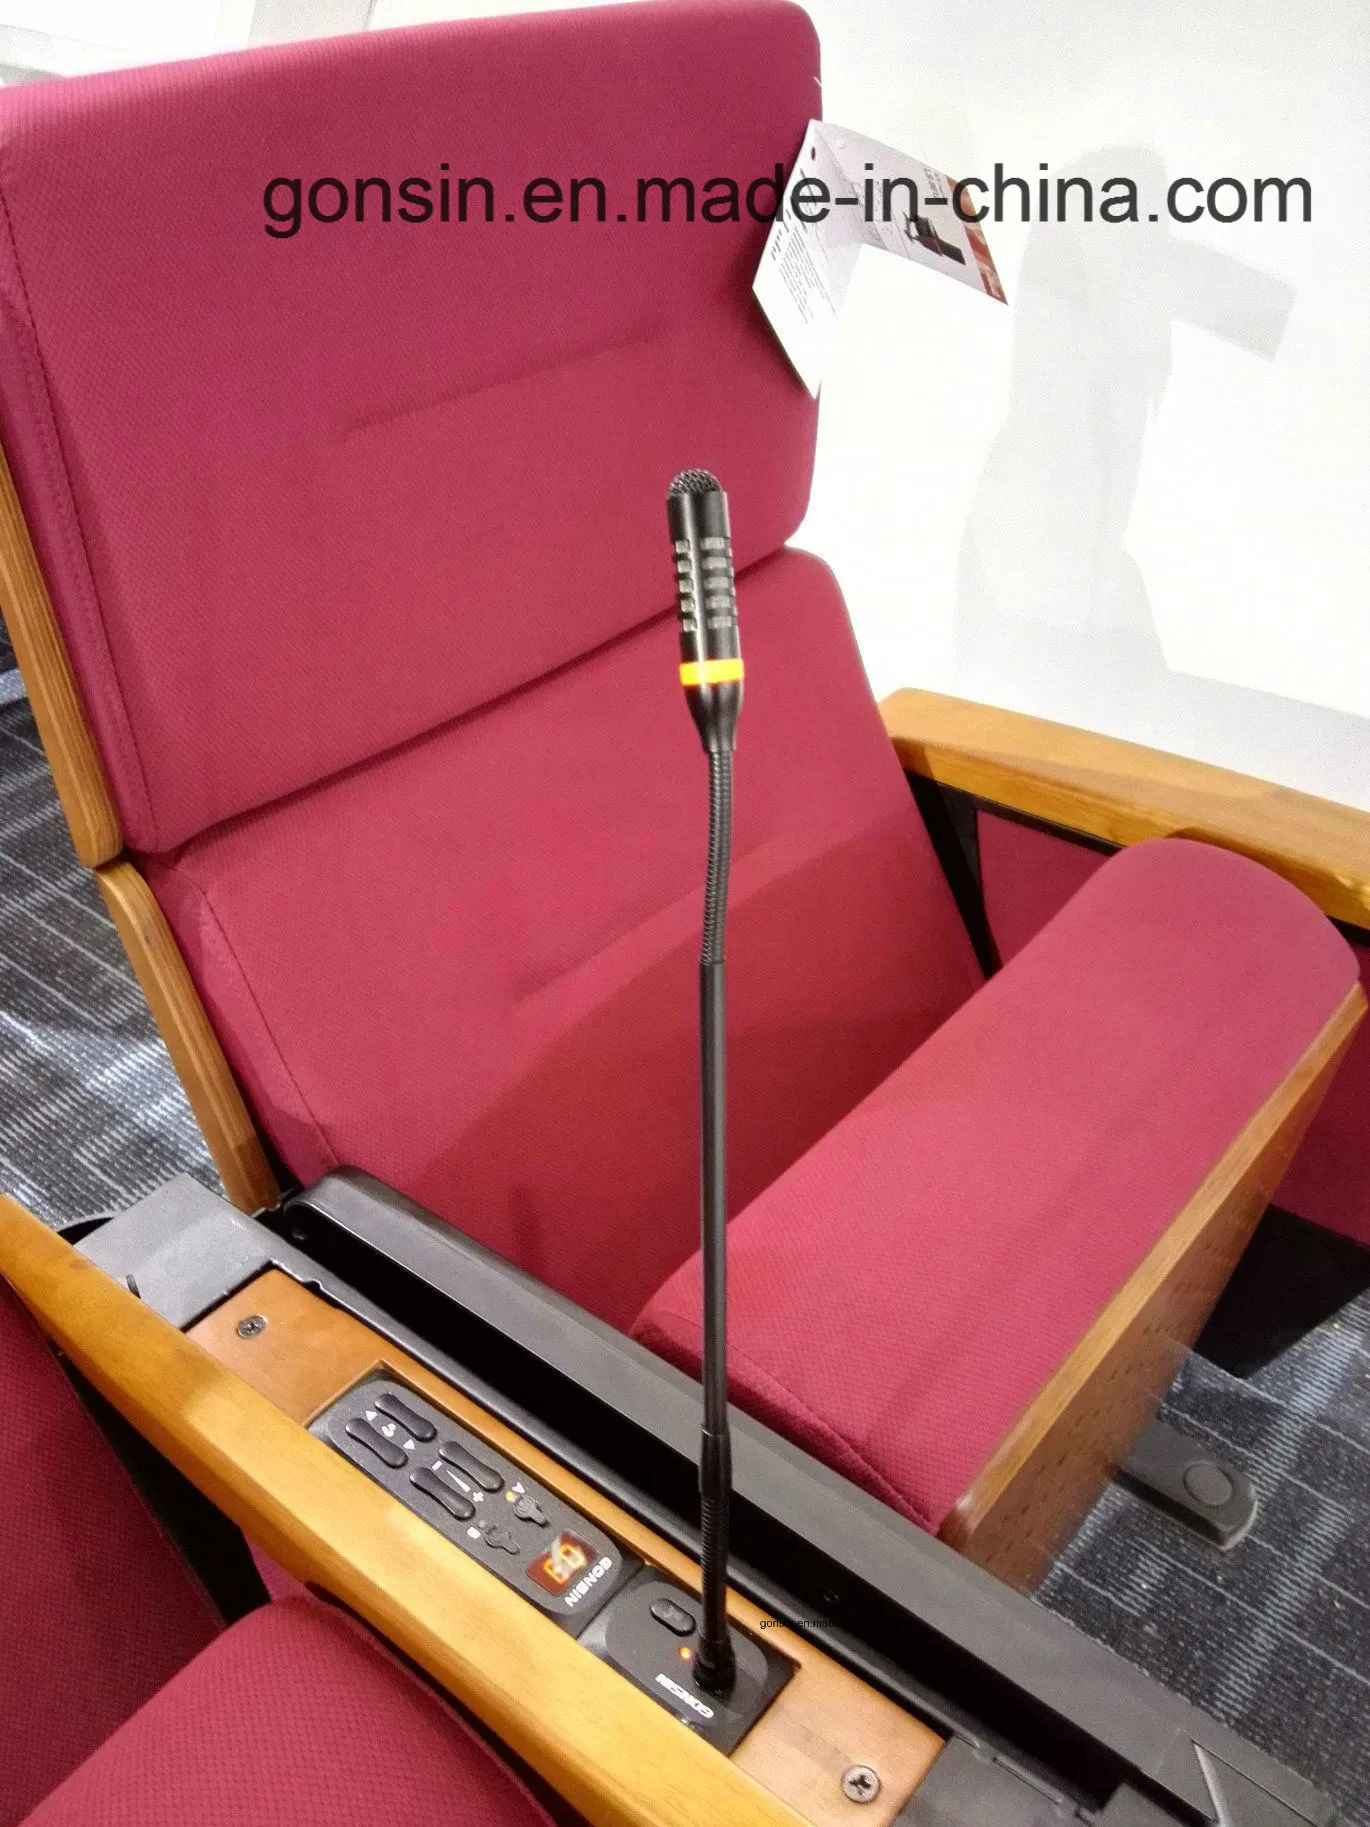 Armrest Conference Microphone for Auditorium